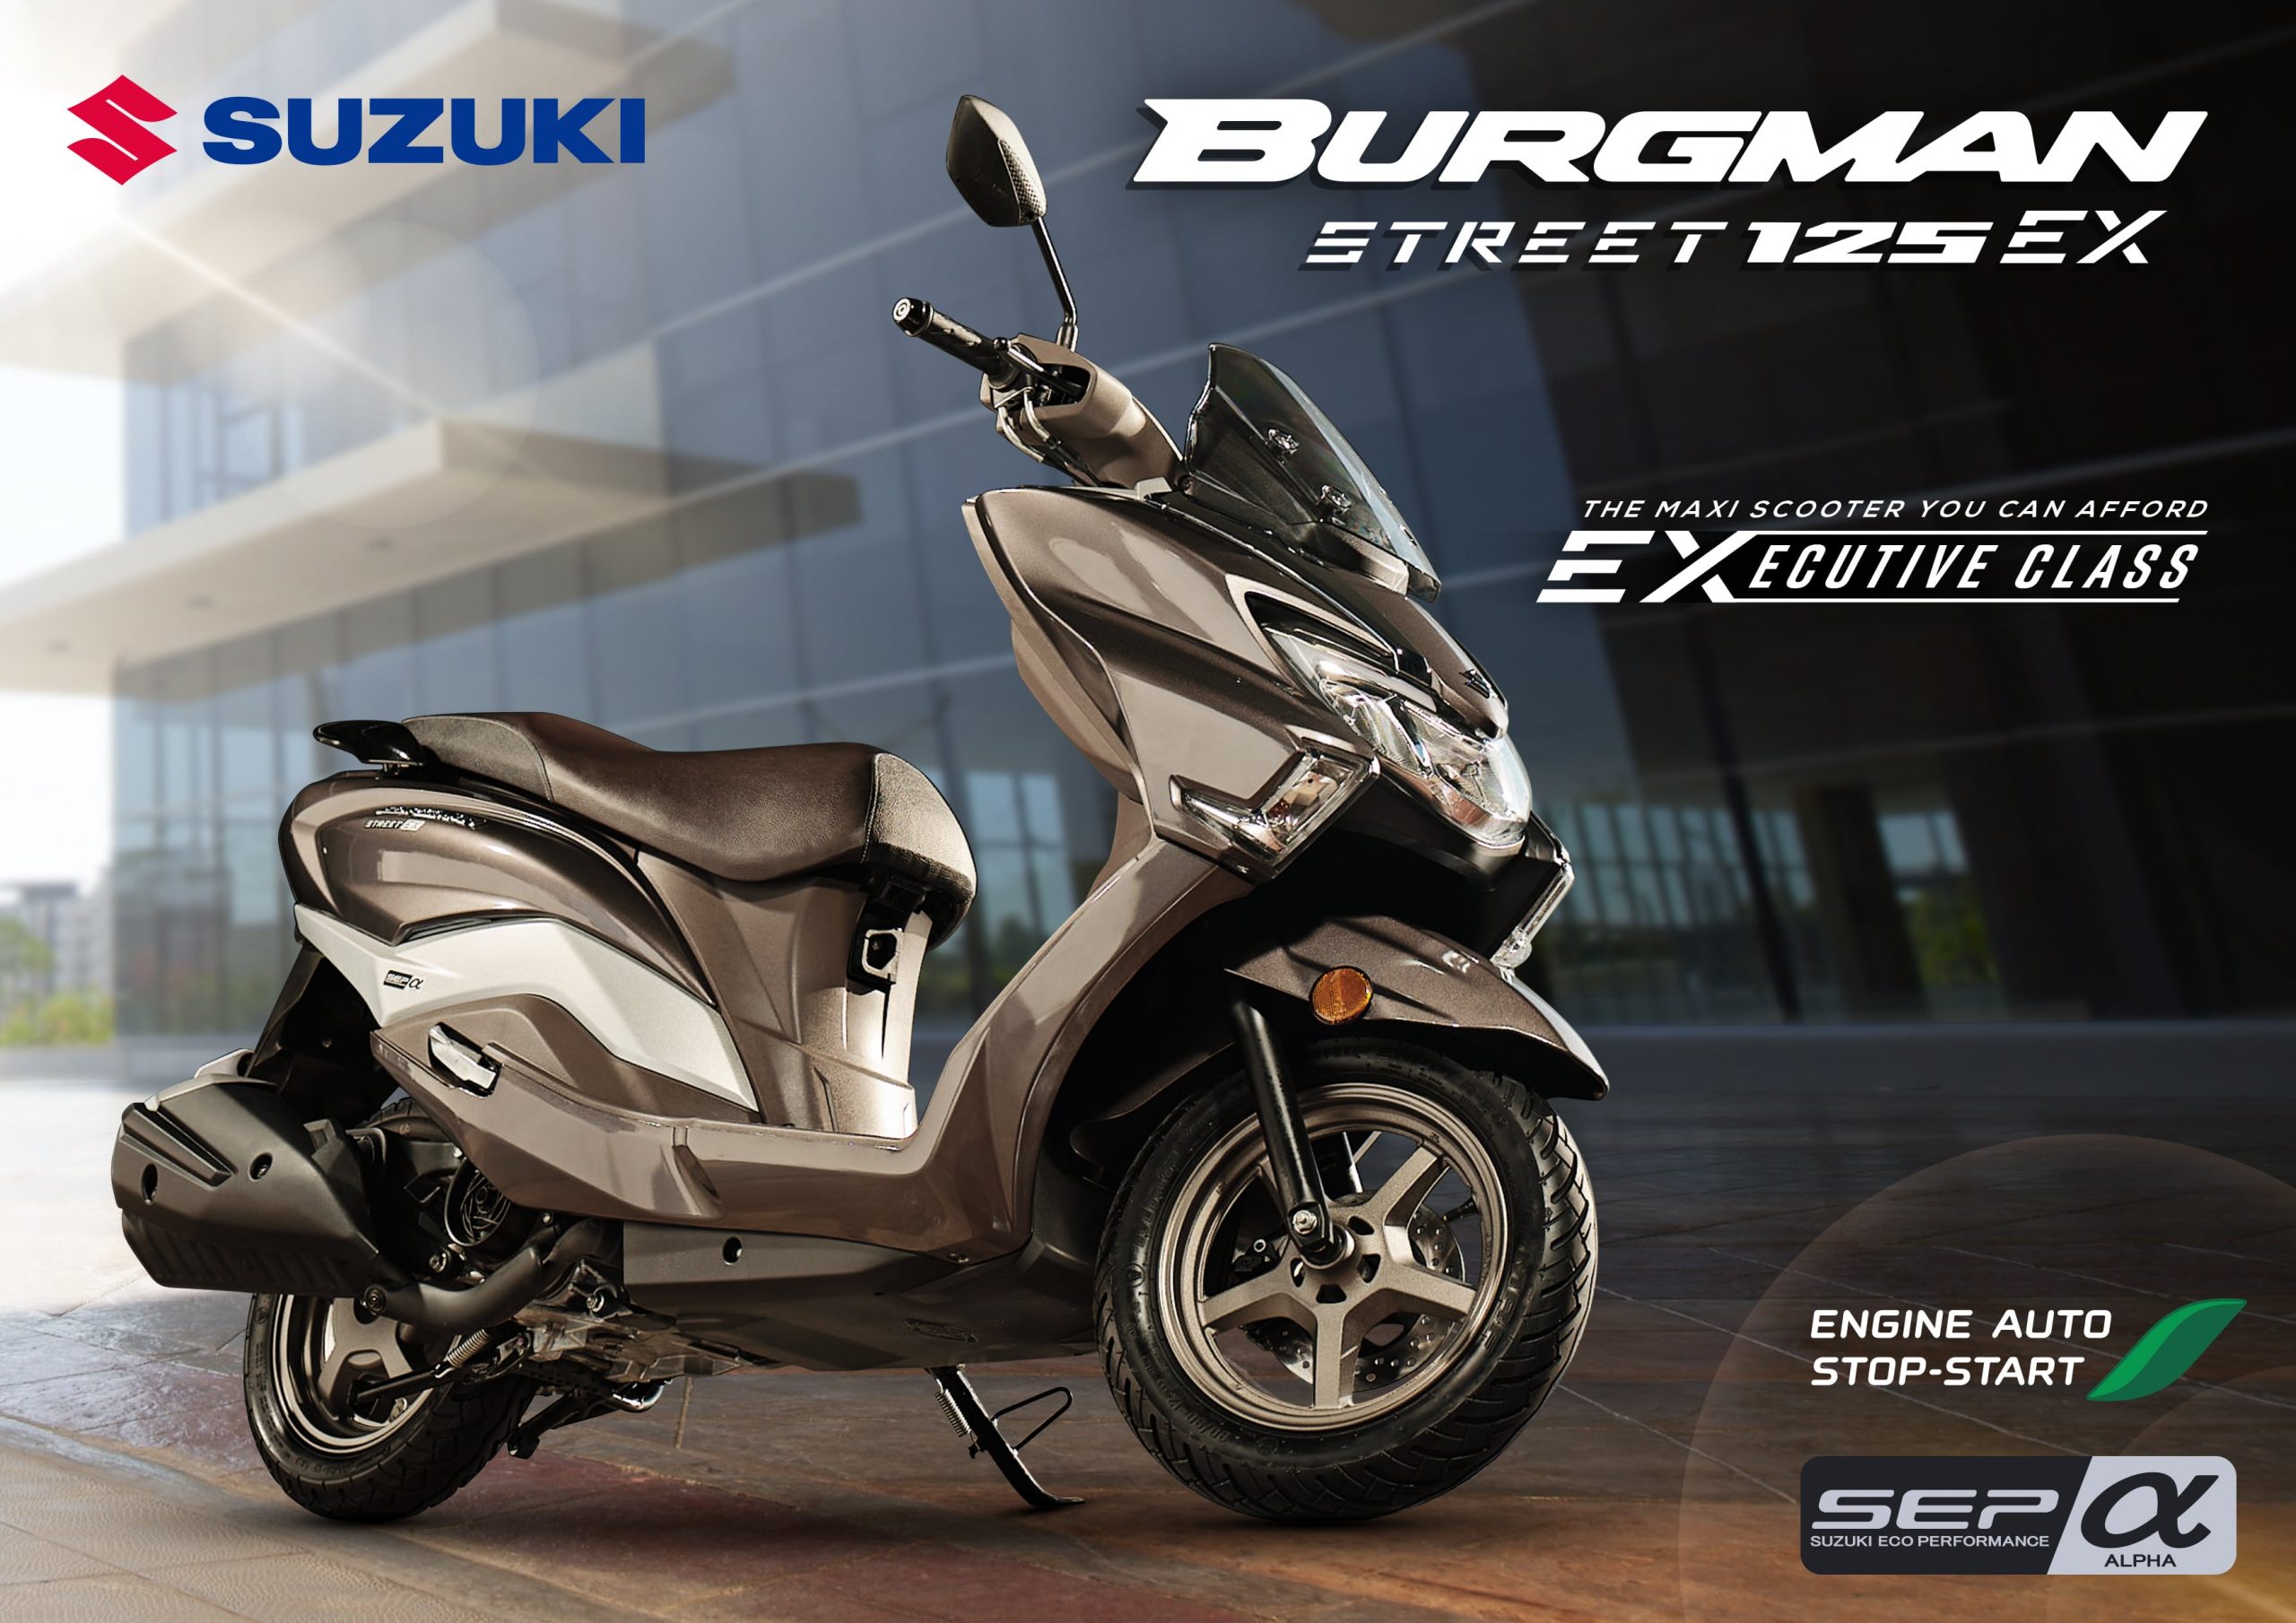 Burgman Street 125 EX - Suzuki Motorcycles Philippines